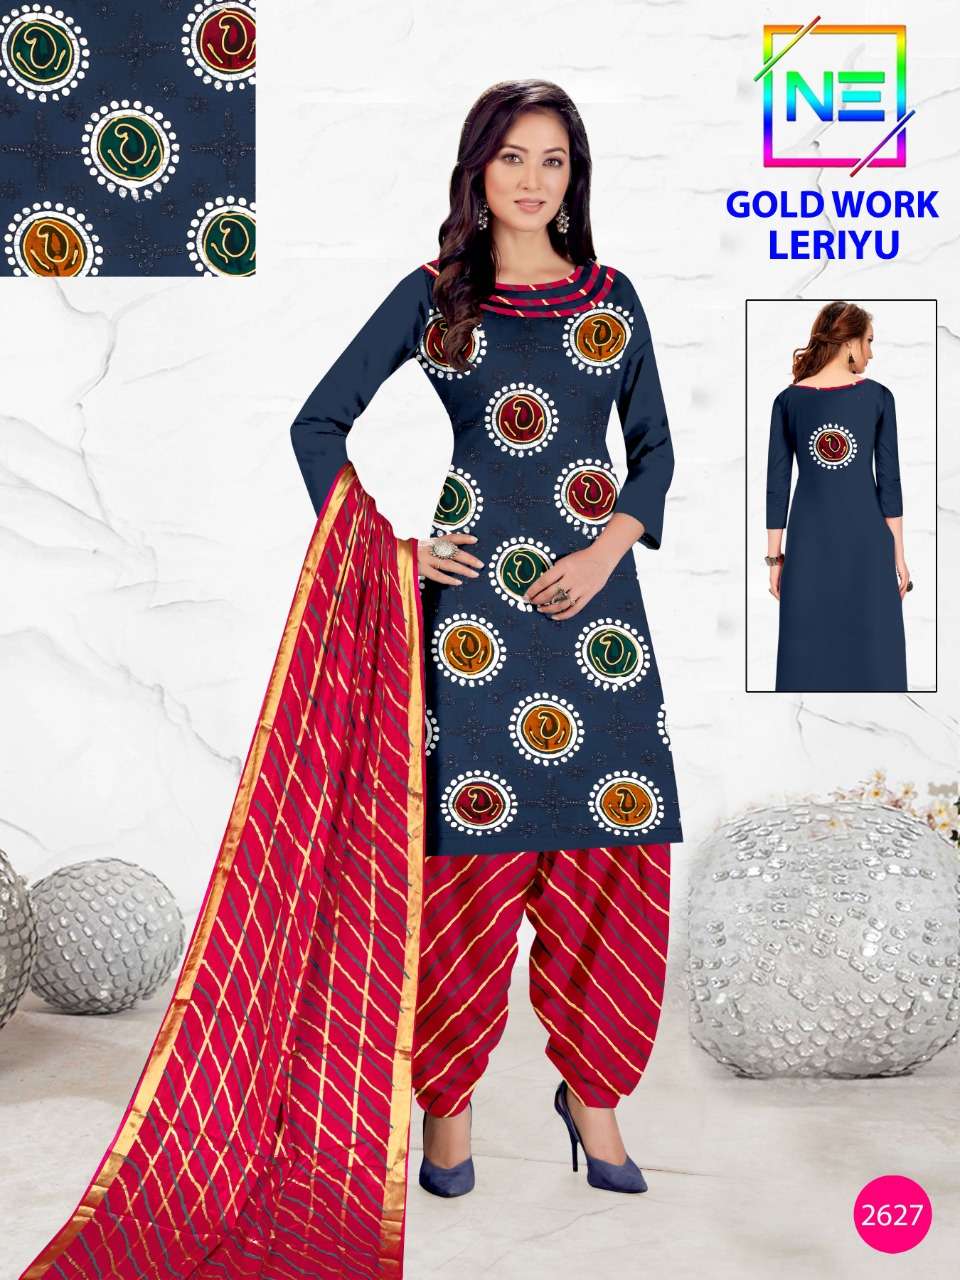 Nemi Leriyu Gold Work Vol-5 series 2621-2670 pure cotton suit 